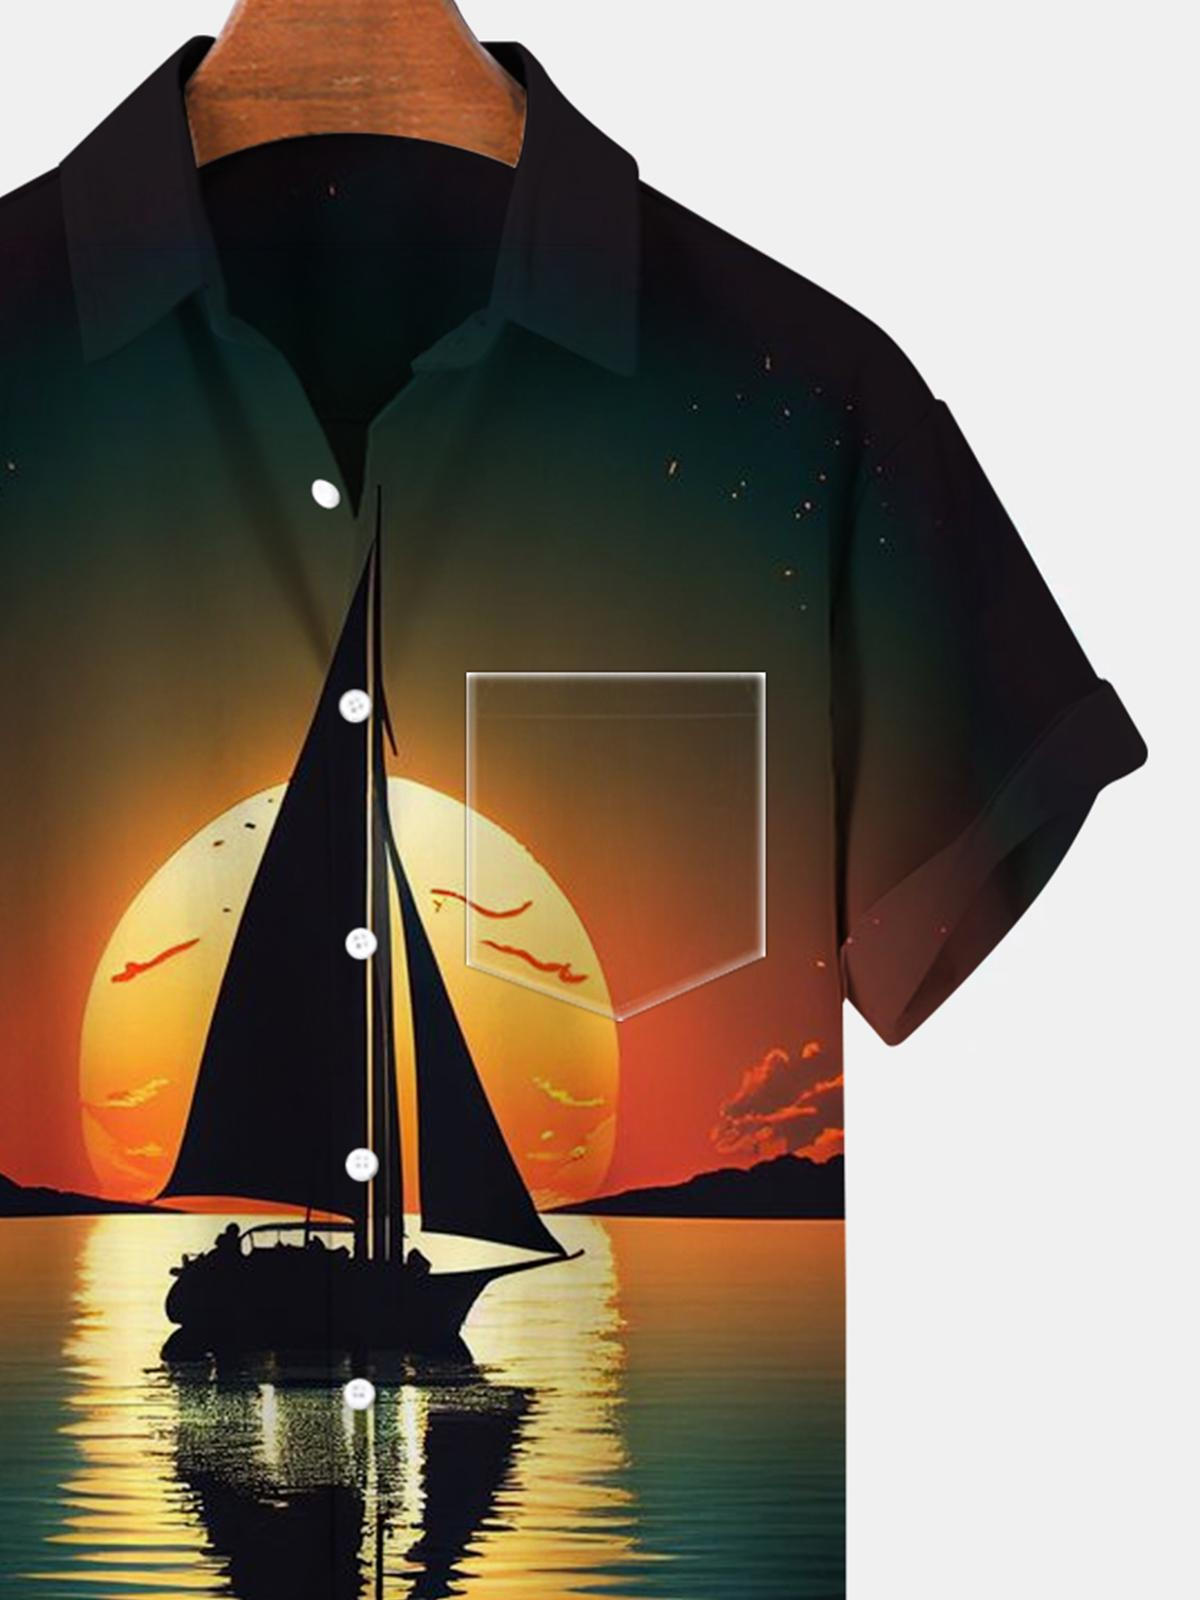 Boat Sunset Short Sleeve Men's Shirts With Pocket